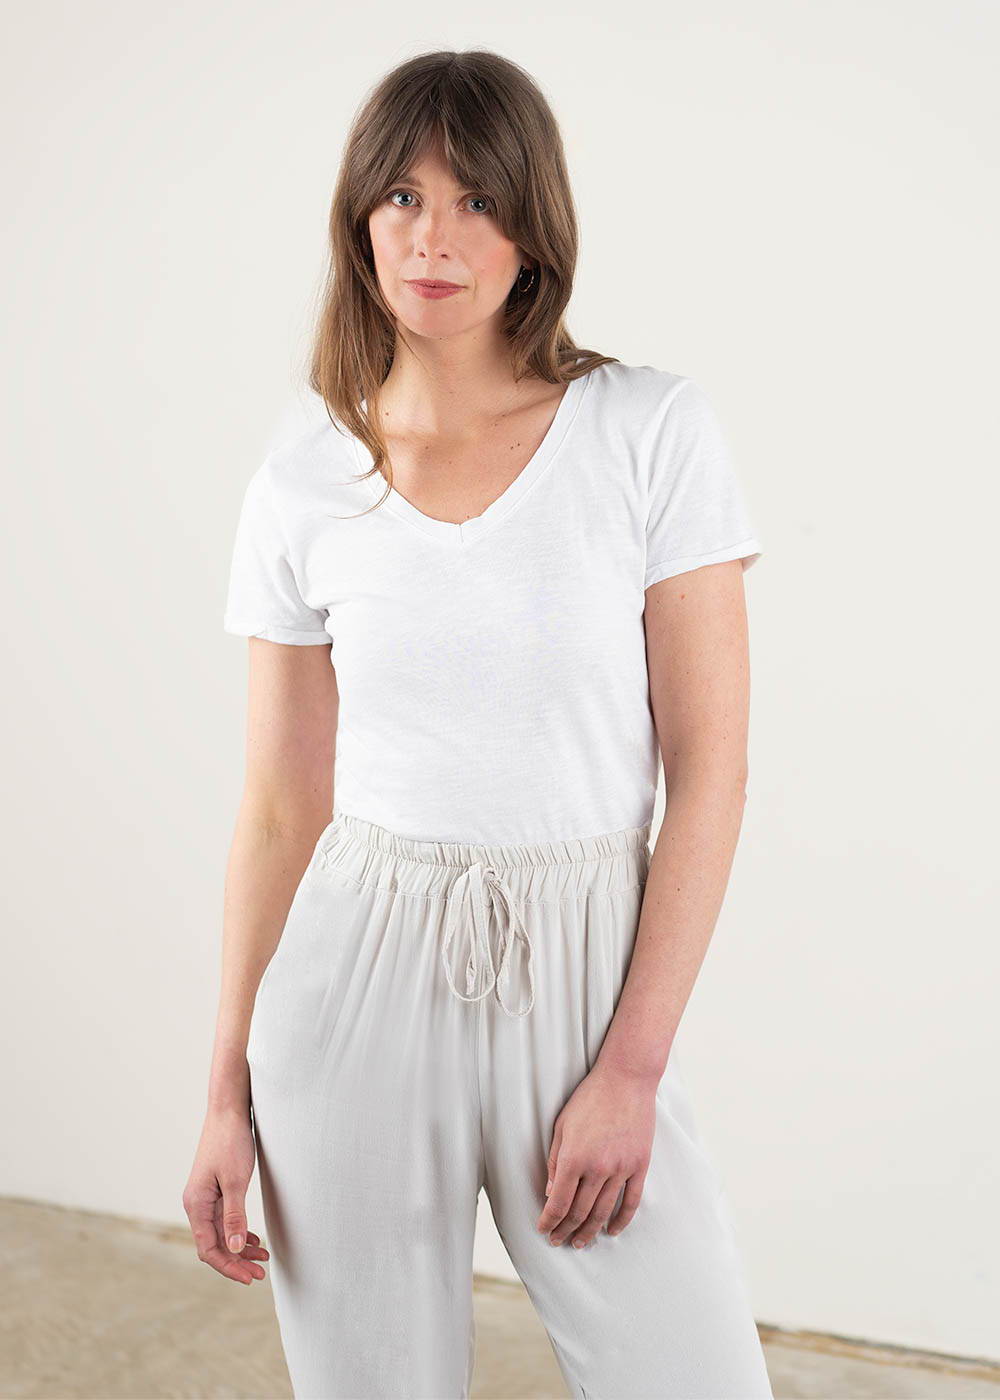 A model wearing a white, v neck short sleeved t shirt